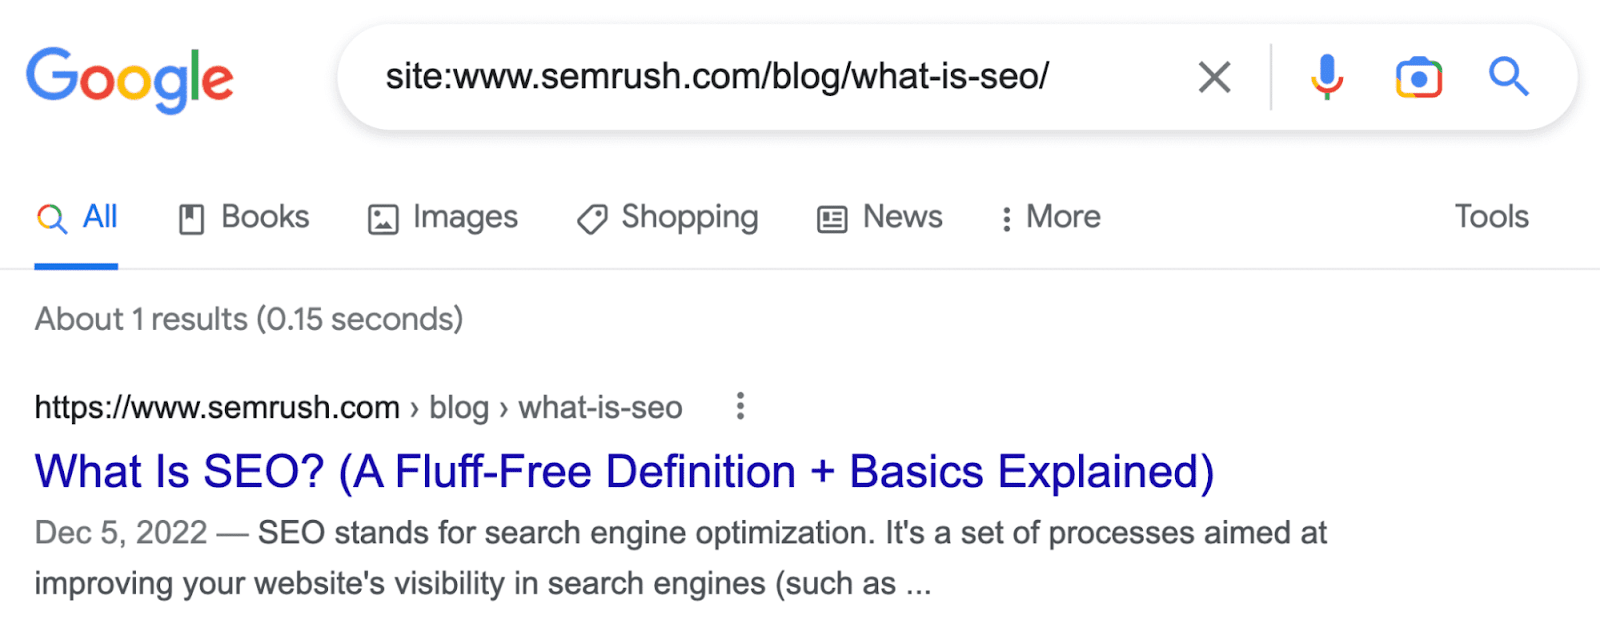 Kết quả của Google cho “site:www.semrush.com/blog/what-is-seo/”